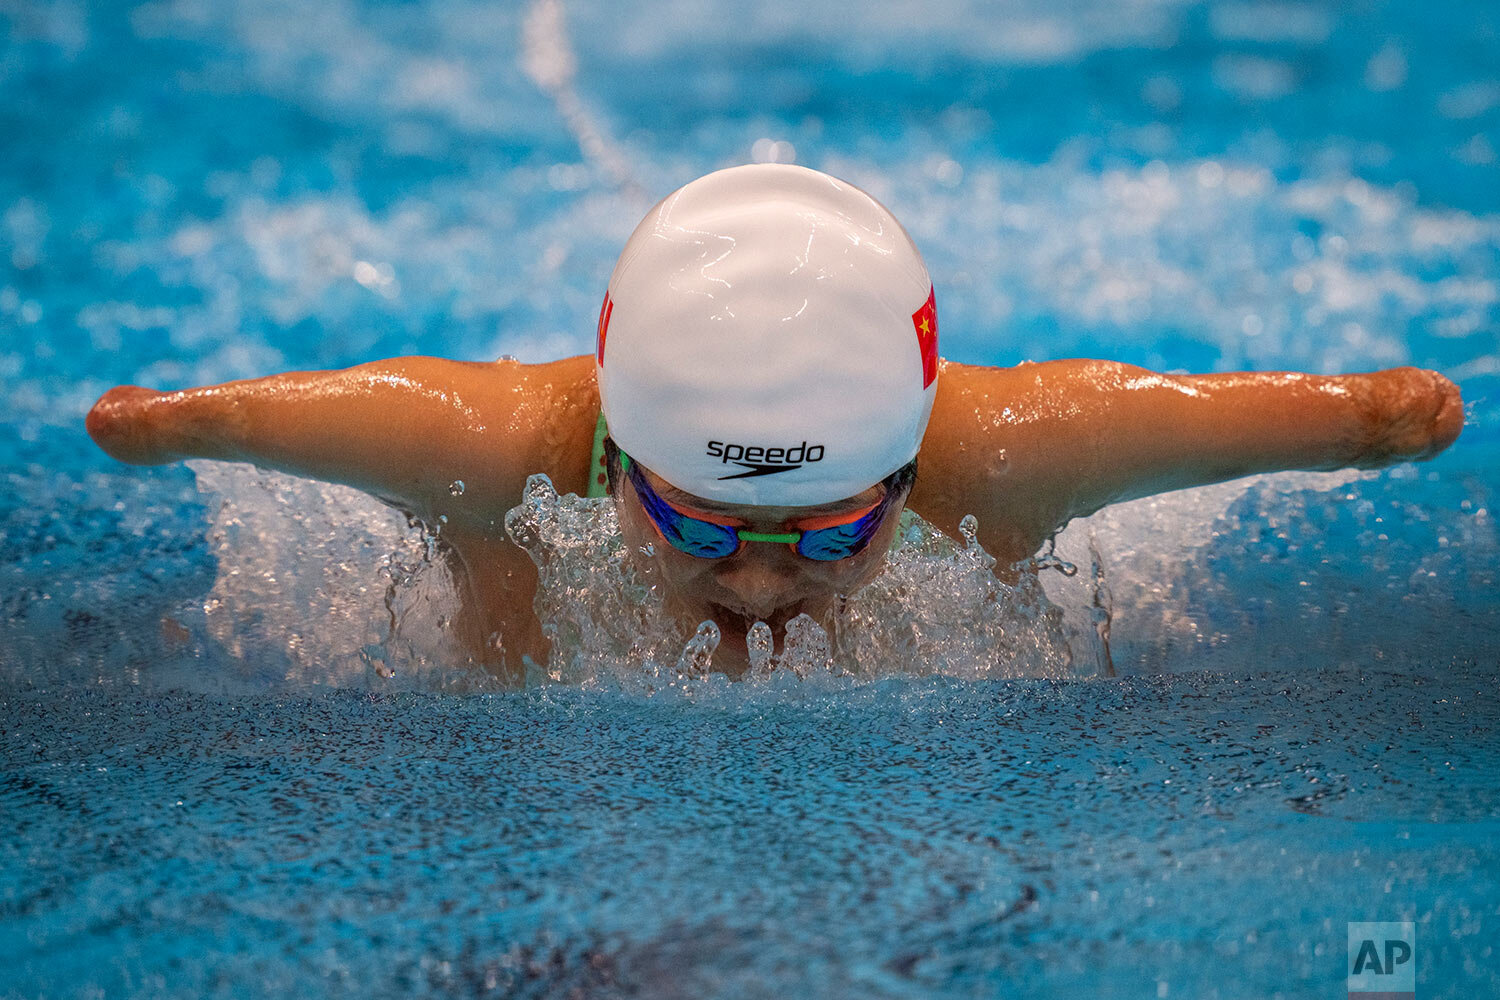  Daomin Liu competes at women's 200m Individual Medley - SM6 Heat 1 at the Tokyo Aquatics Centre during the Tokyo 2020 Paralympic Games, Thursday, Aug. 26, 2021, in Tokyo. (AP Photo/Emilio Morenatti) 